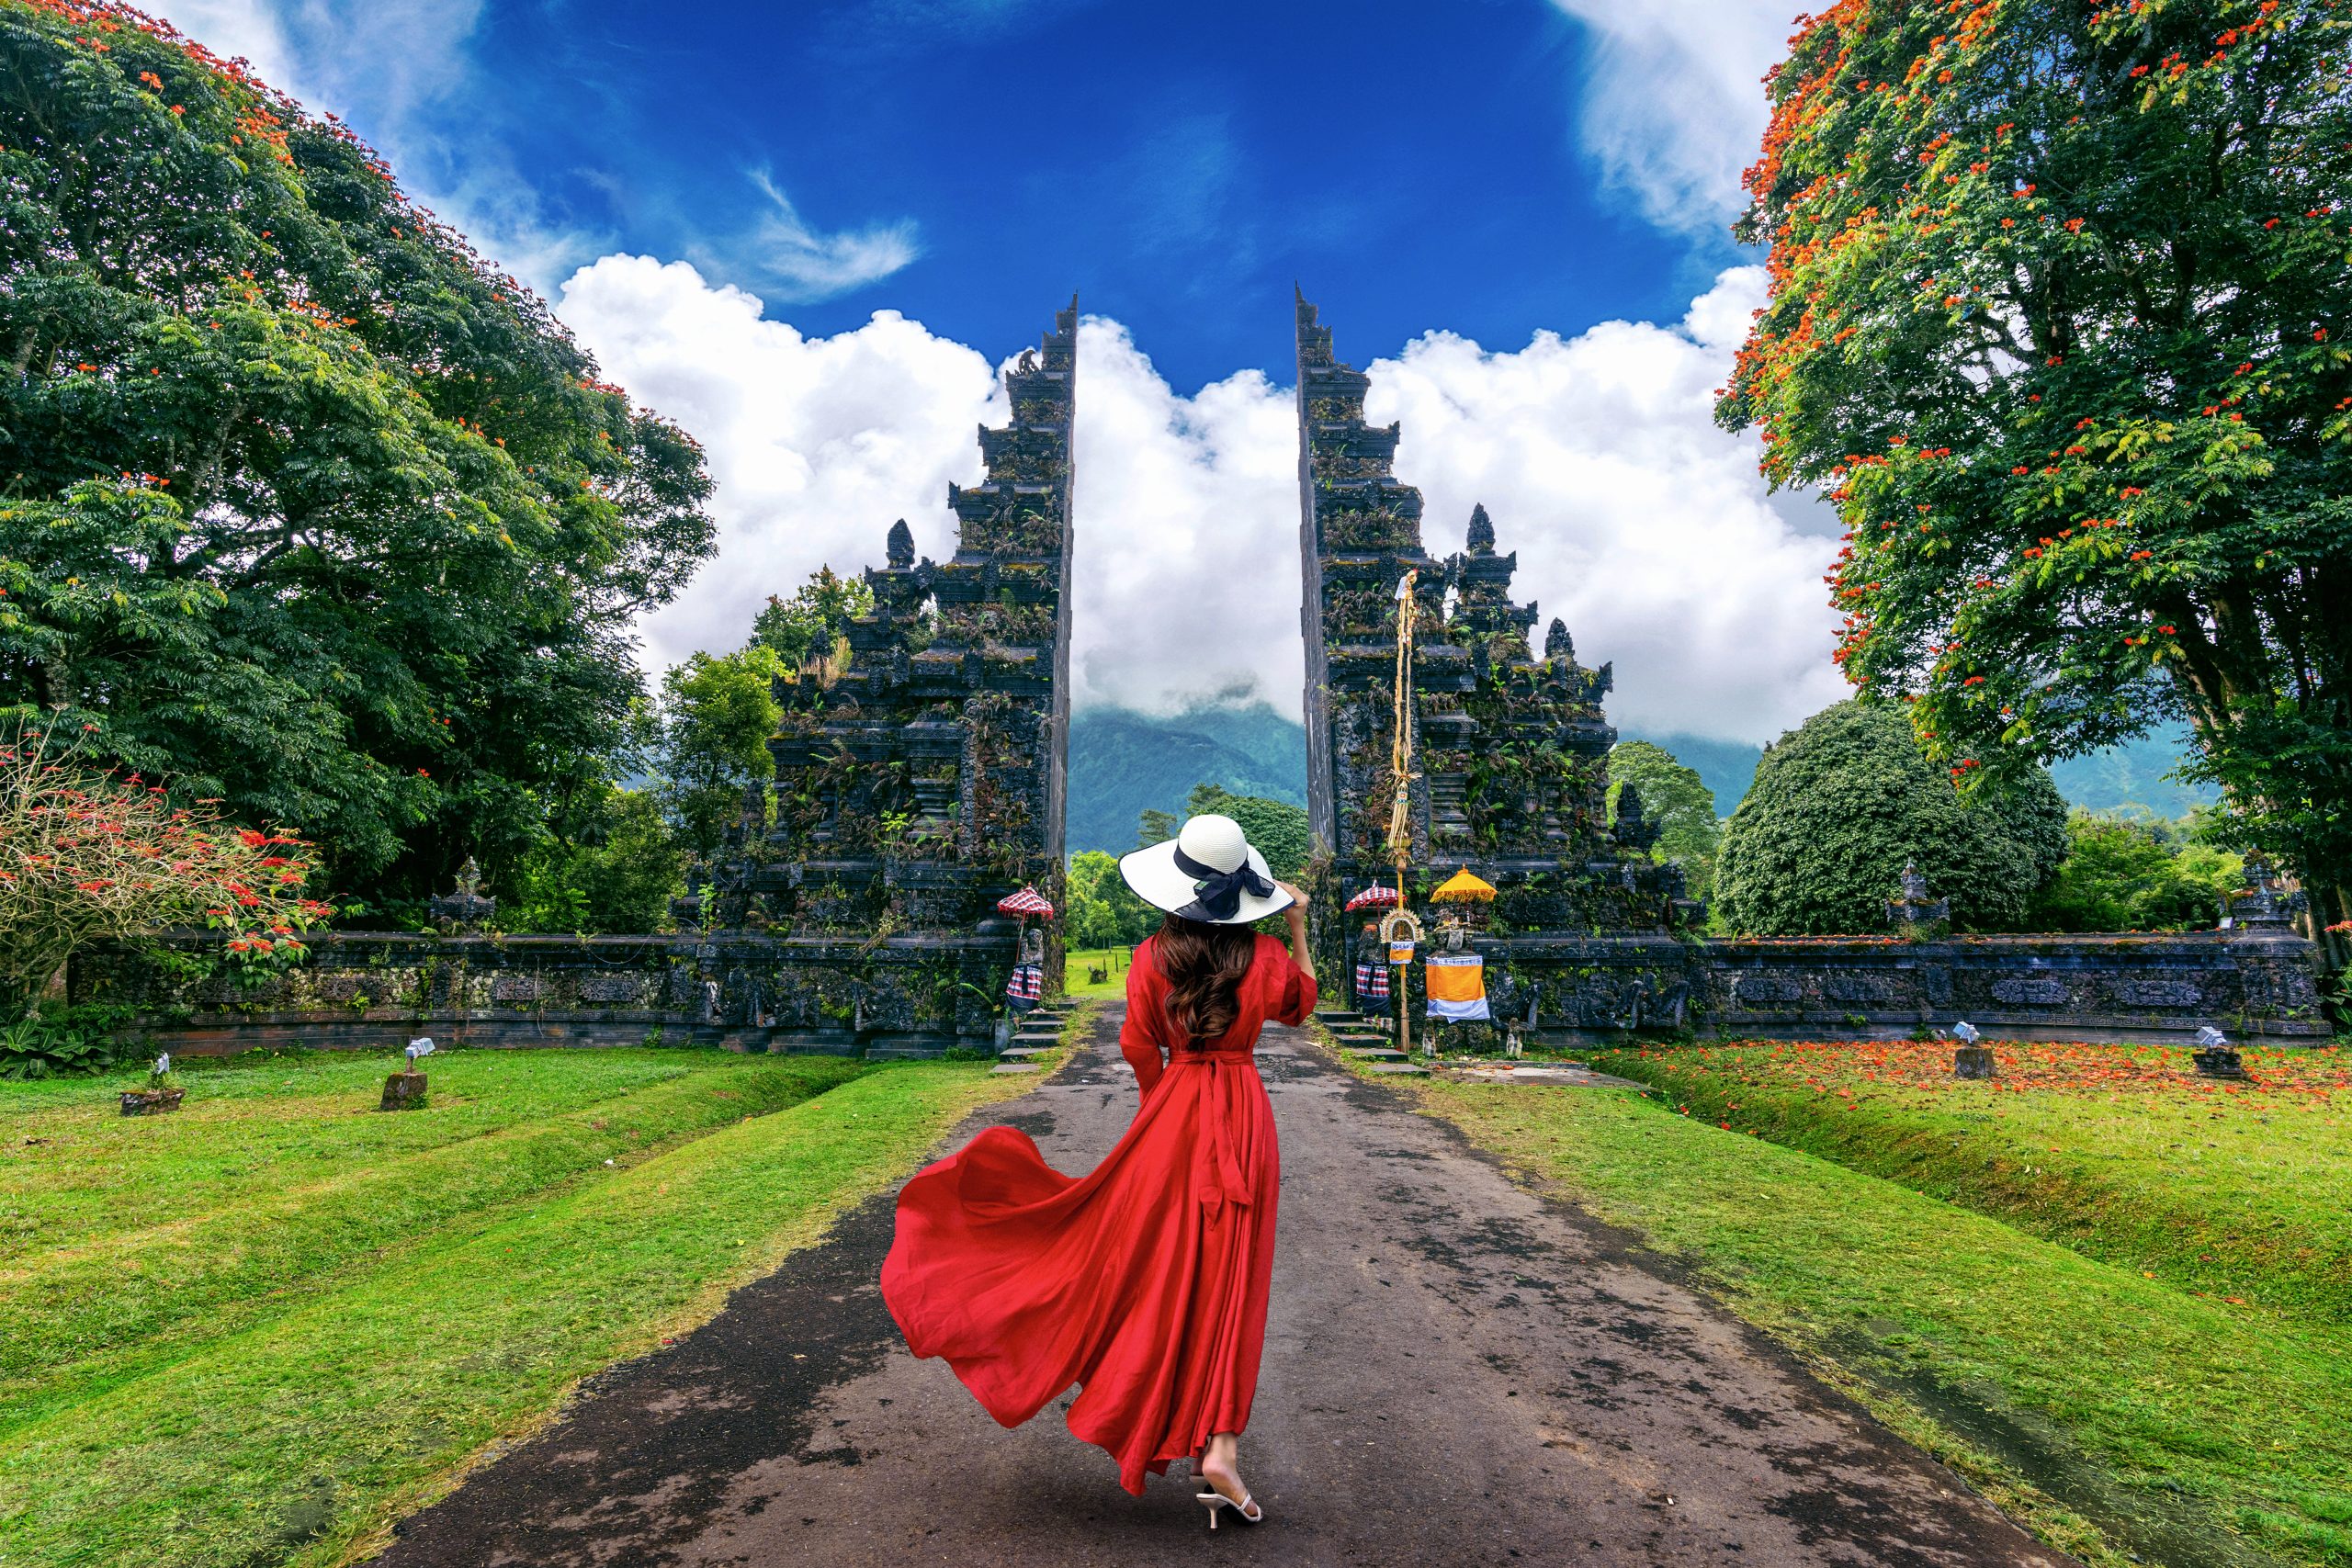 Woman walking at big entrance gate, Bali in Indonesia.